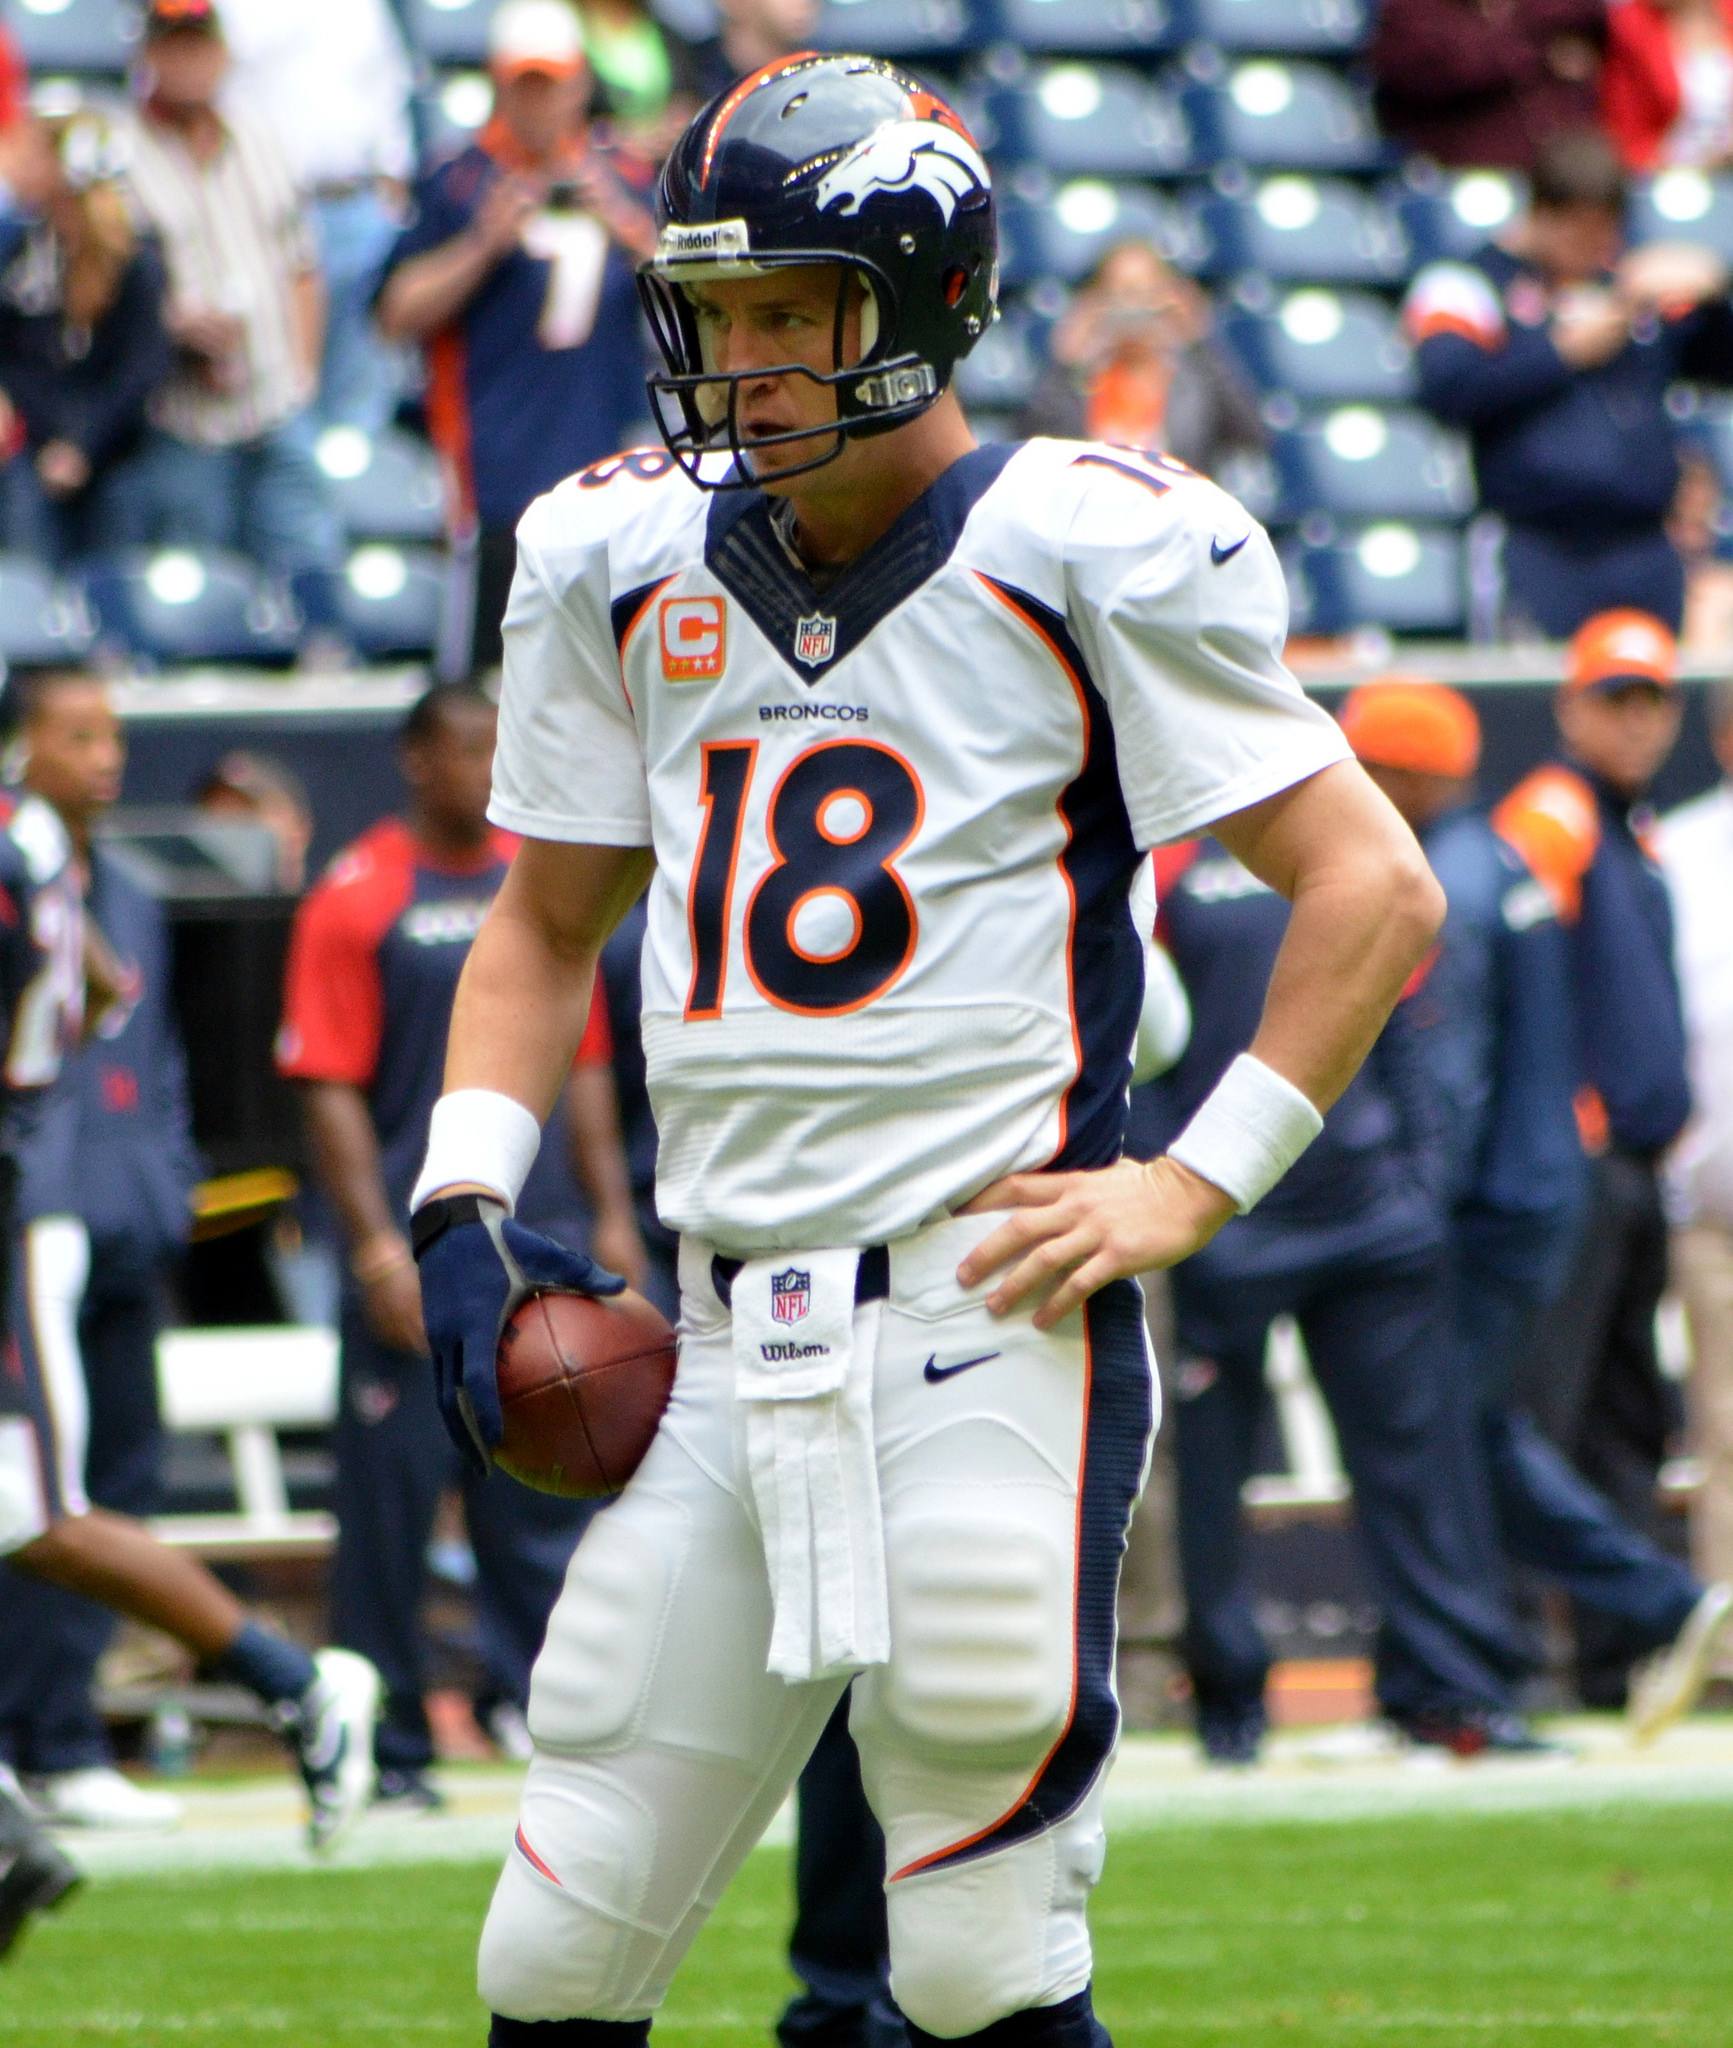 The great Peyton Manning. Photo by Karen via Flickr.